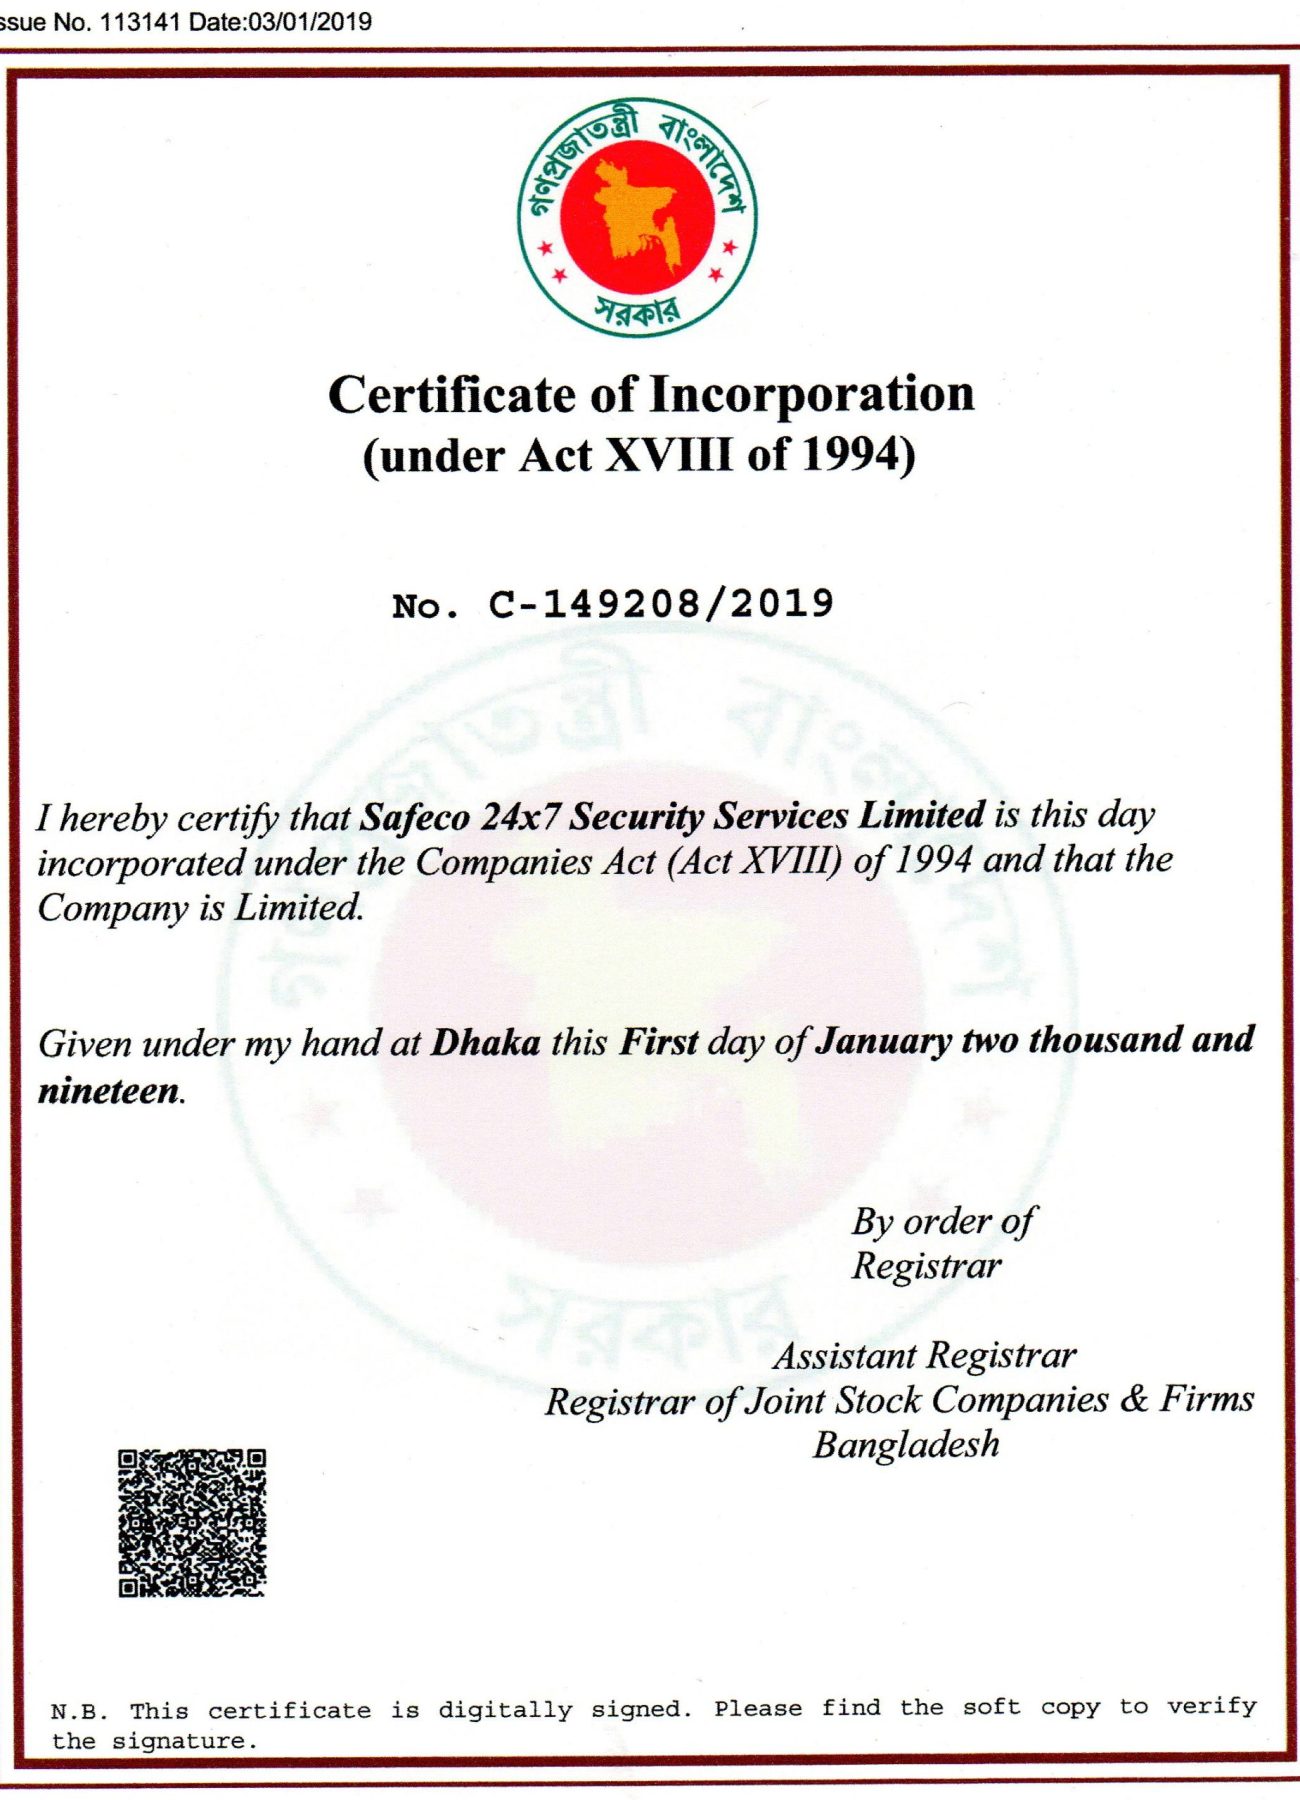 Safeco Incorporation Certificate